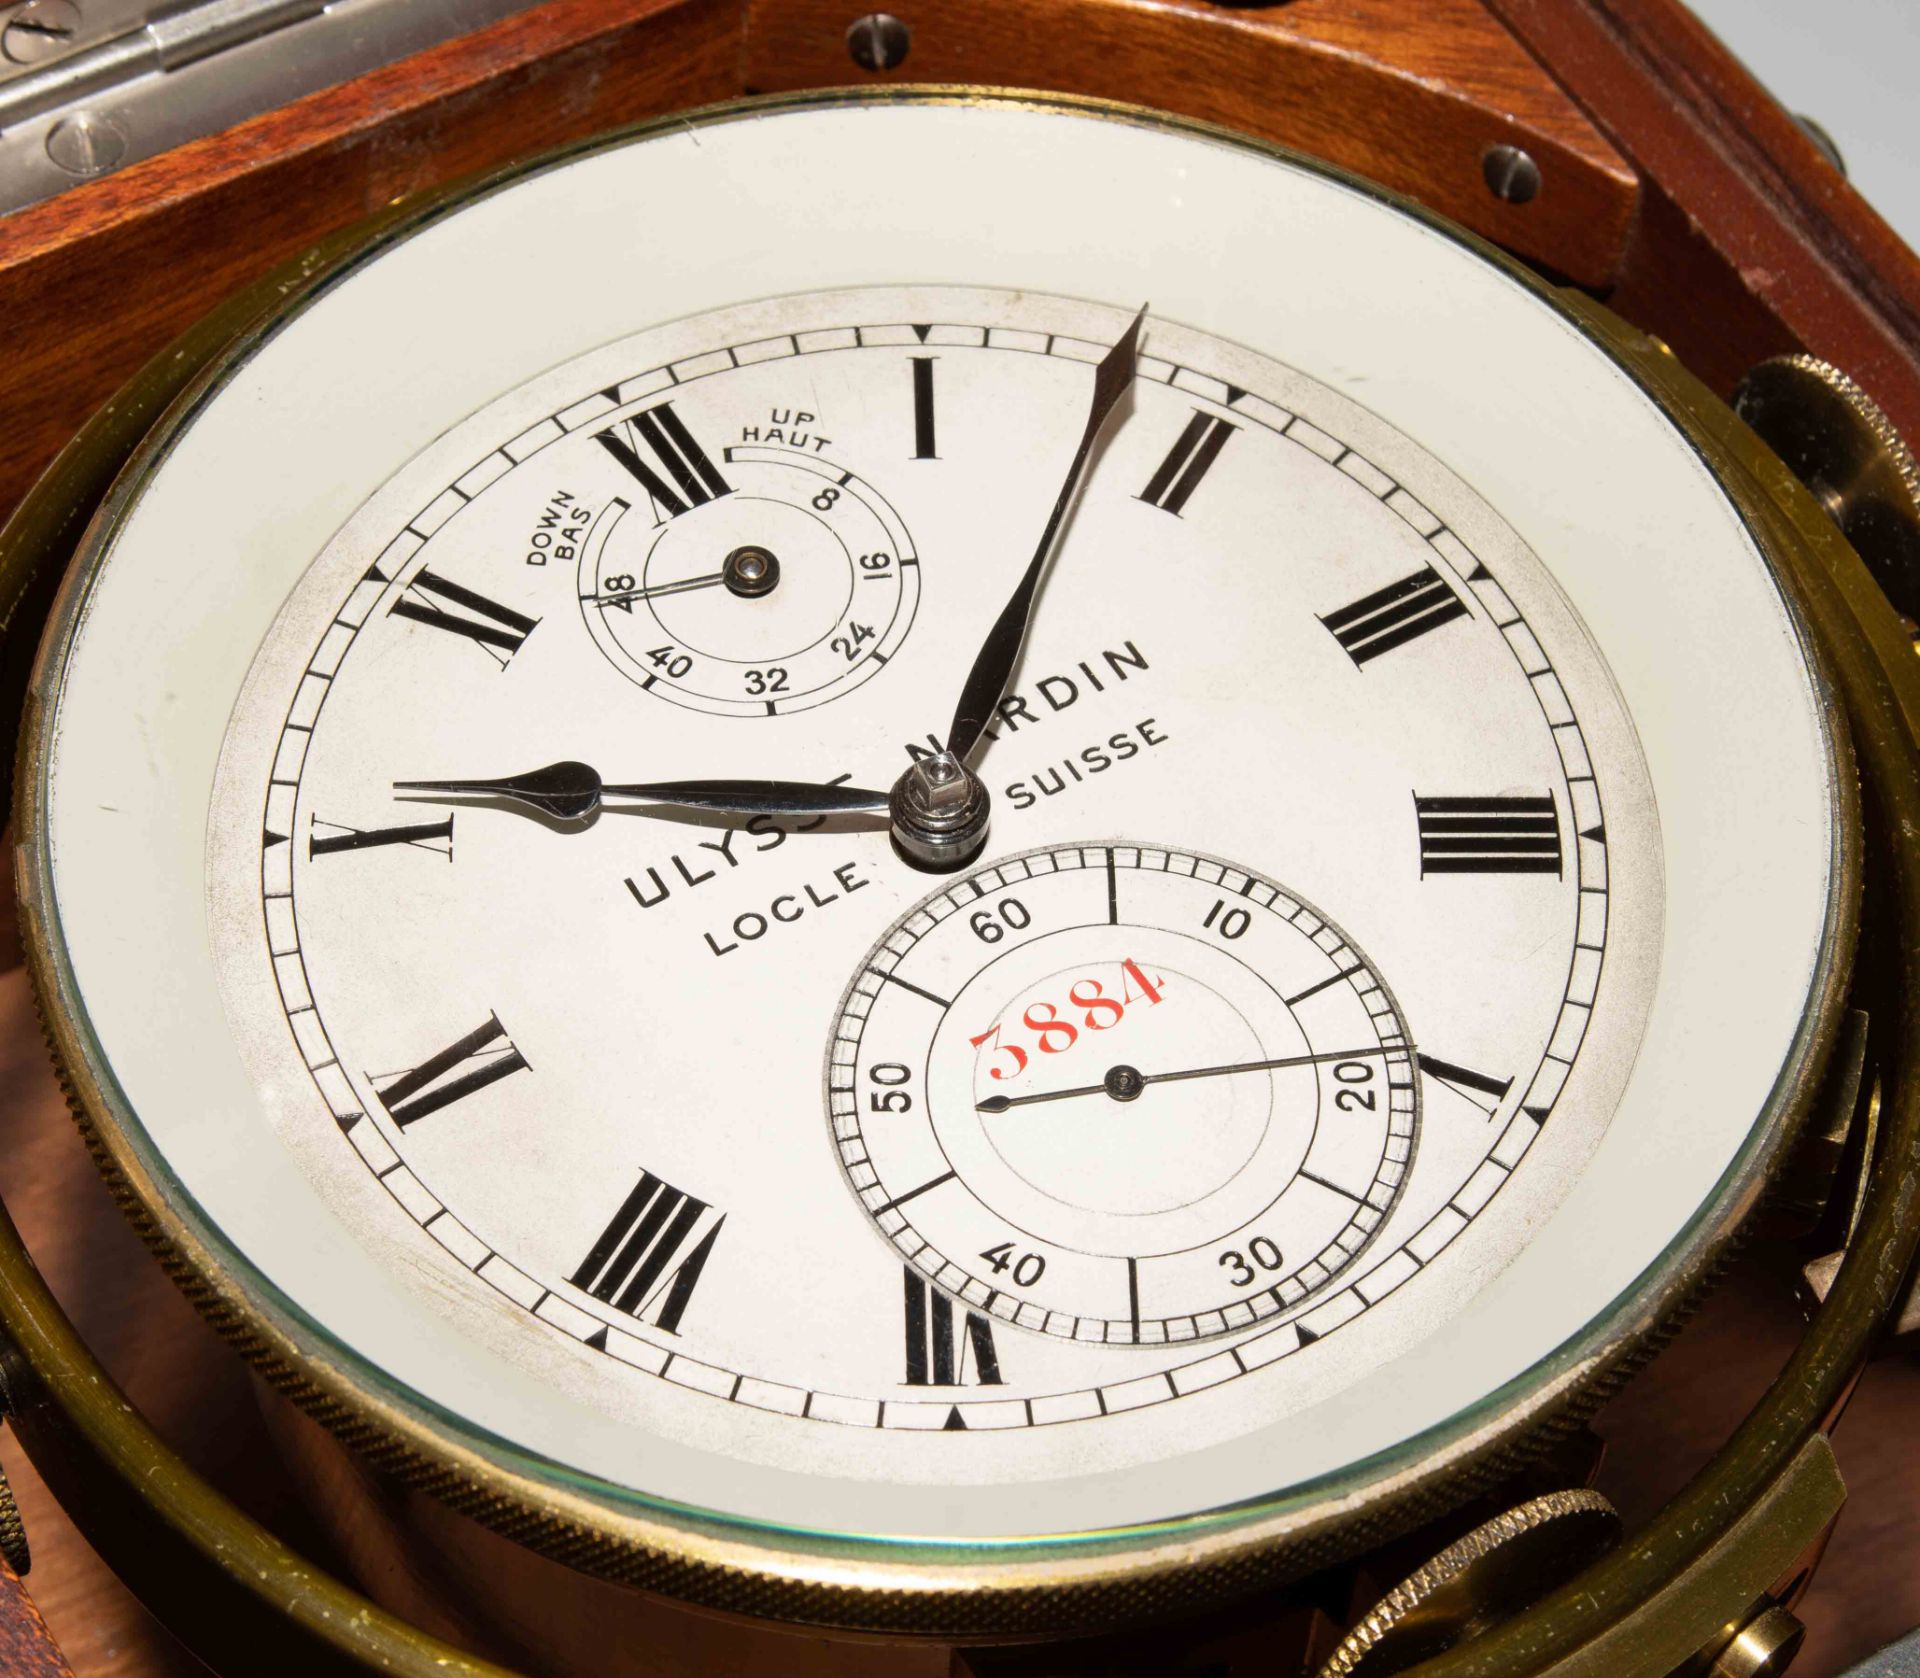 Schiffschronometer "Ulysse-Nardin" - Image 9 of 9